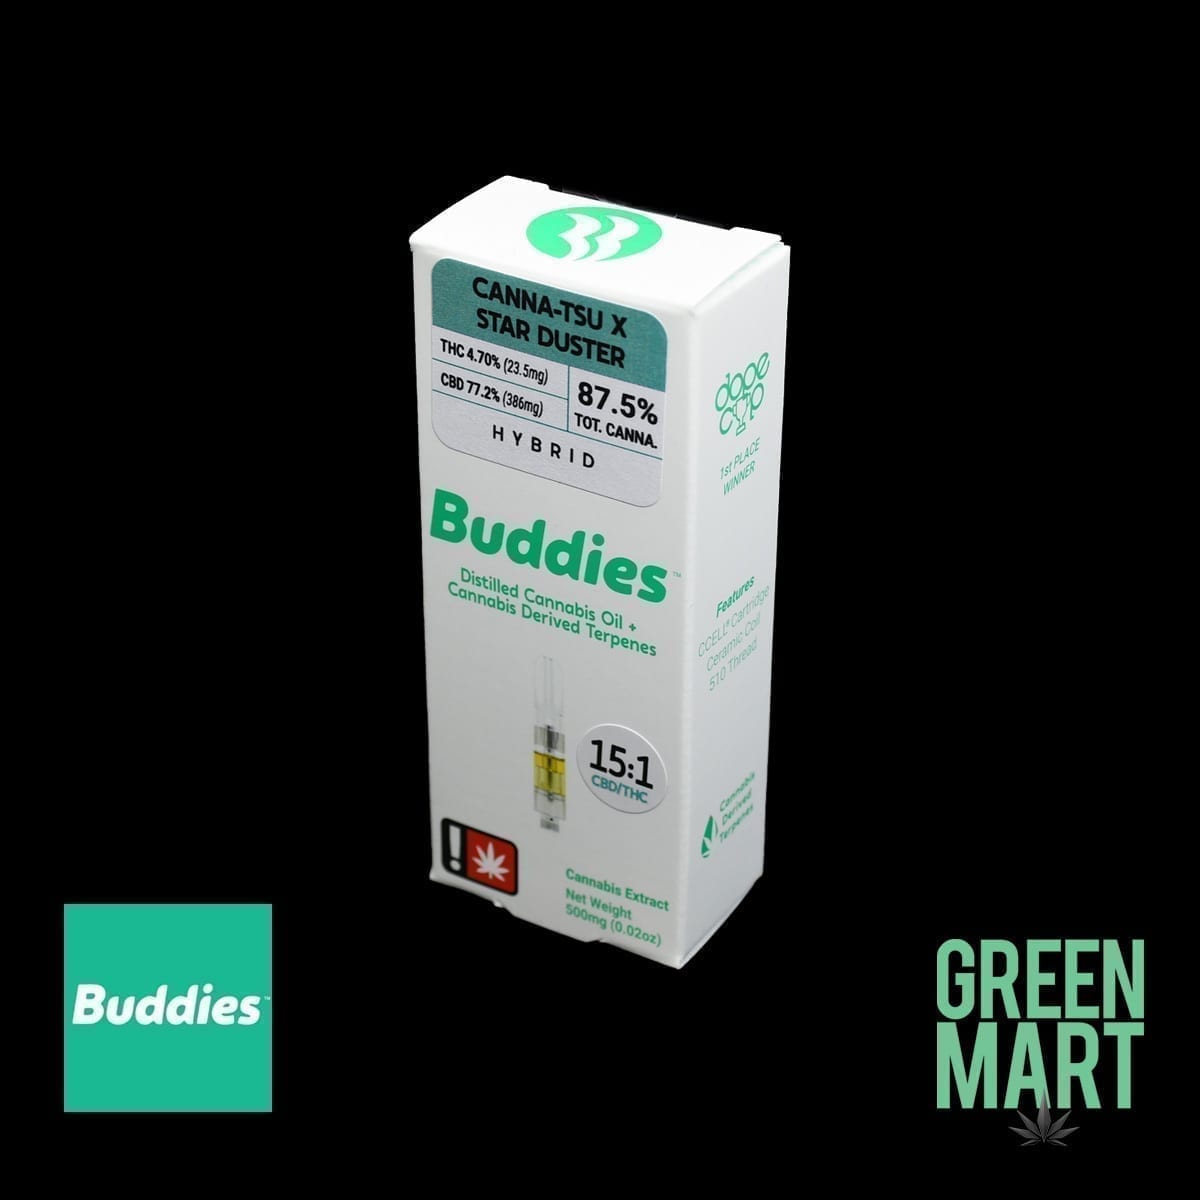 Buddies Brand Cartridges - Canna Tsu x Duster Half G